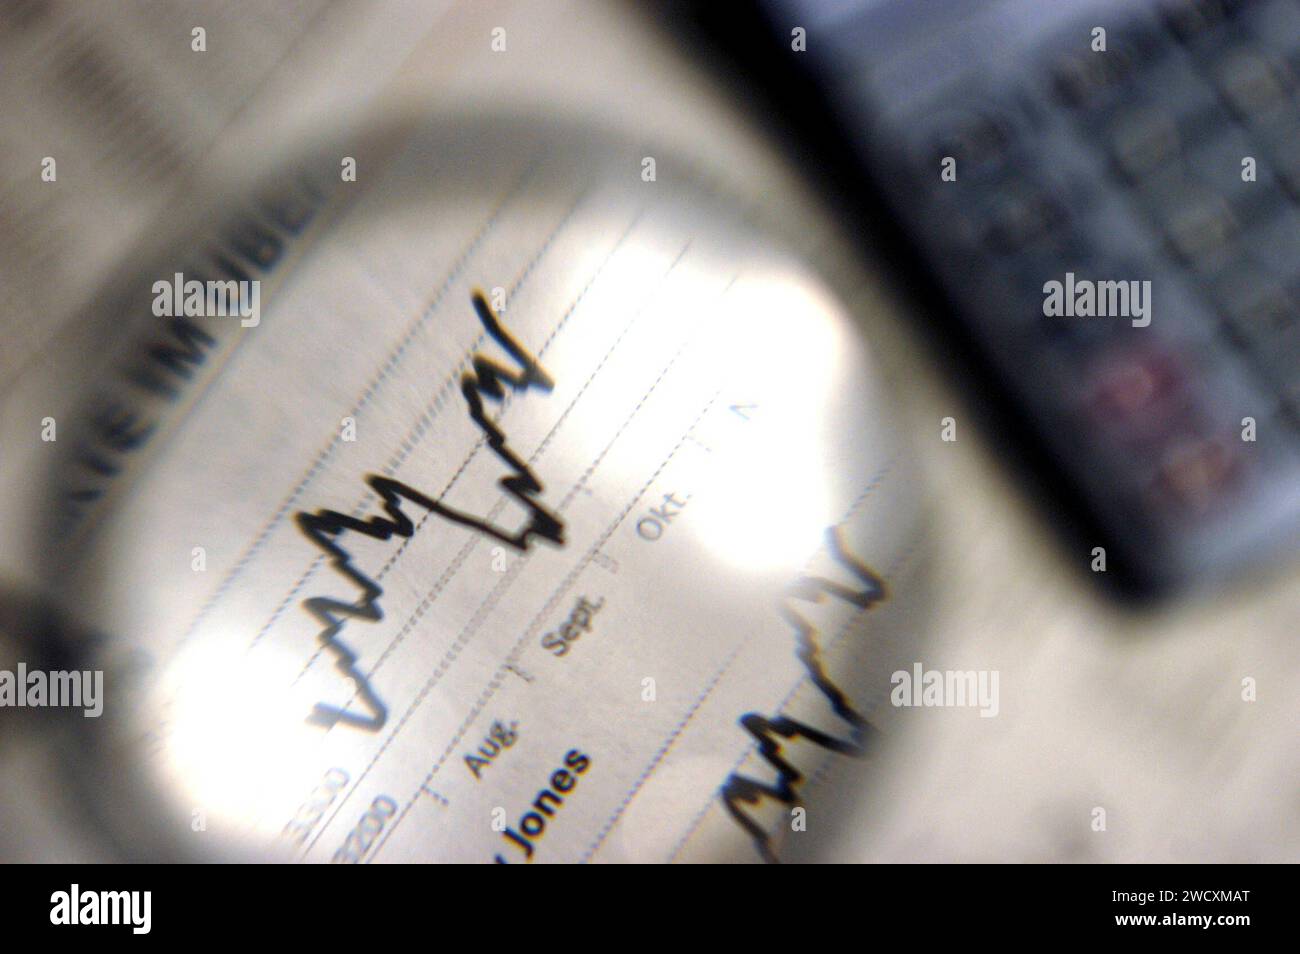 Aktien mit einer Lupe betrachtet, Deutschland, BLF *** Shares viewed with a magnifying glass, Germany, BLF BL018731 Stock Photo